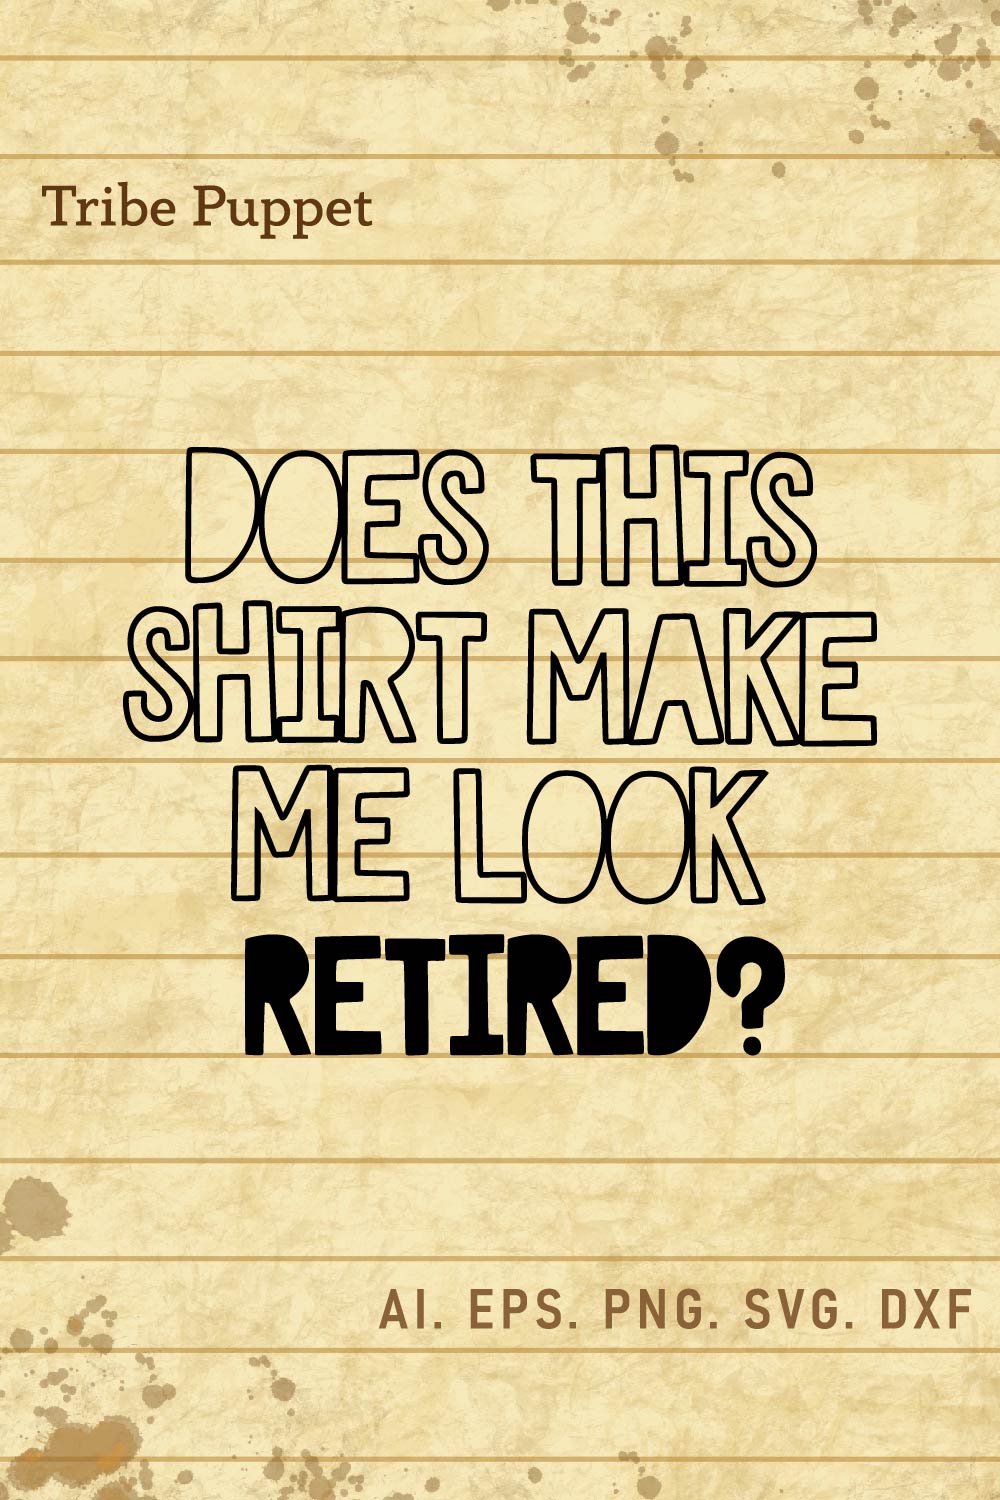 Retirement Quotes pinterest preview image.